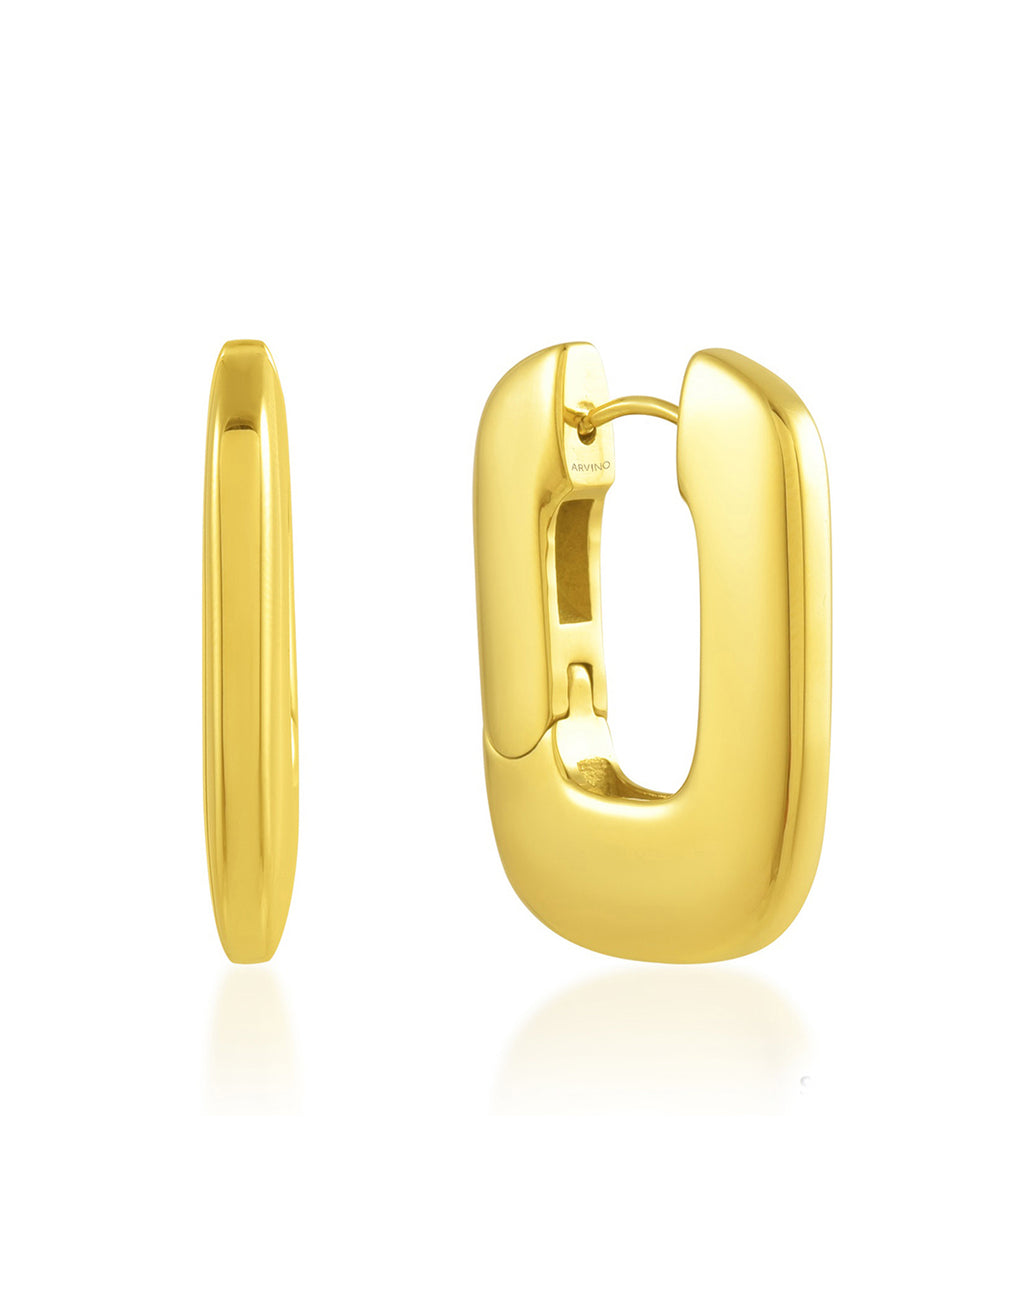 Casual Geometric Ellipse Hoops - Statement Earrings - Gold-Plated & Hypoallergenic Jewellery - Made in India - Dubai Jewellery - Dori